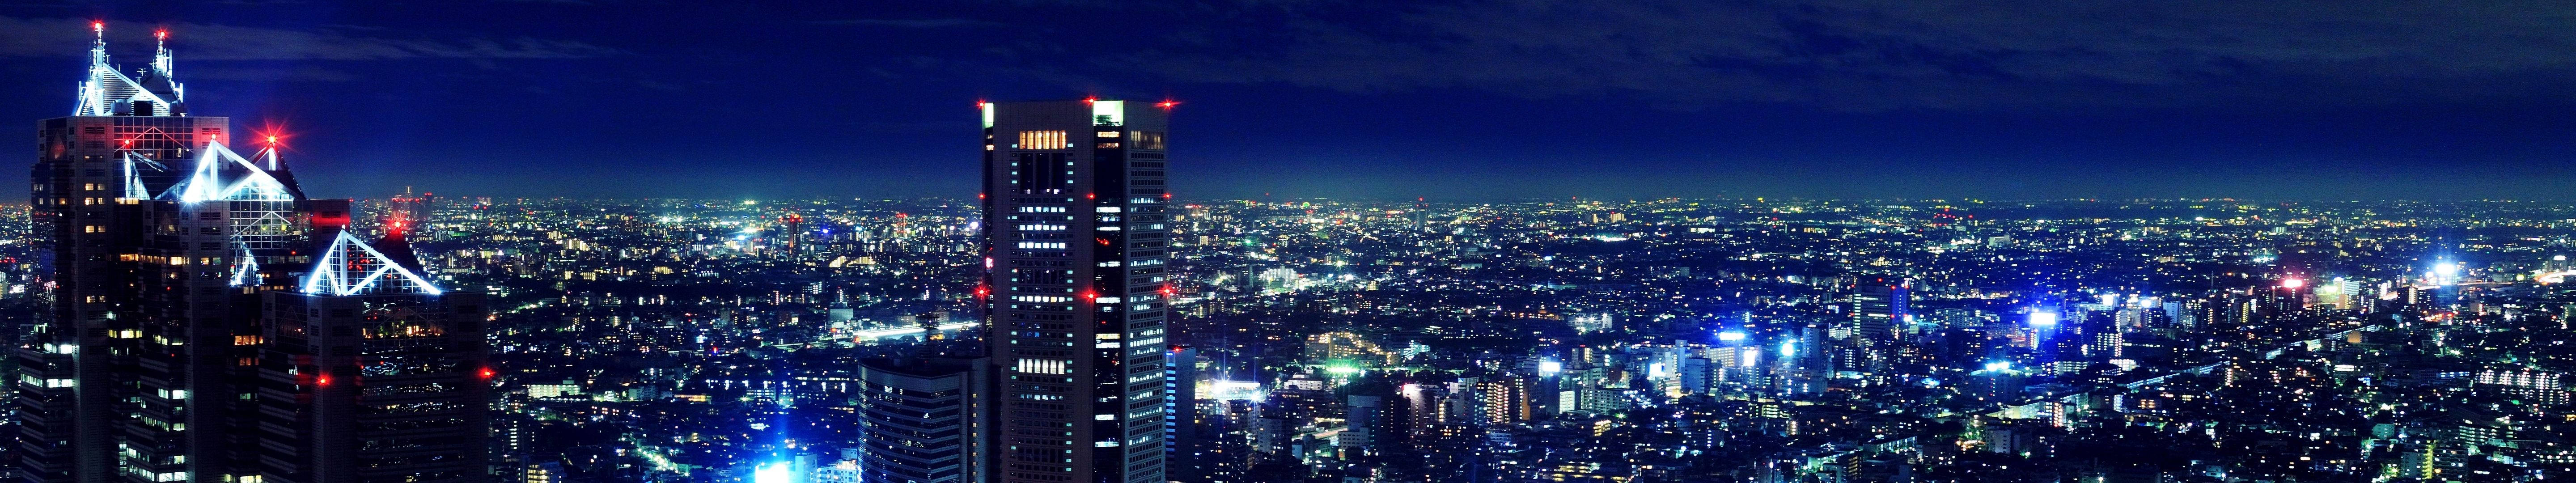 Download 3 Monitor Tokyo Night City Wallpaper | Wallpapers.com